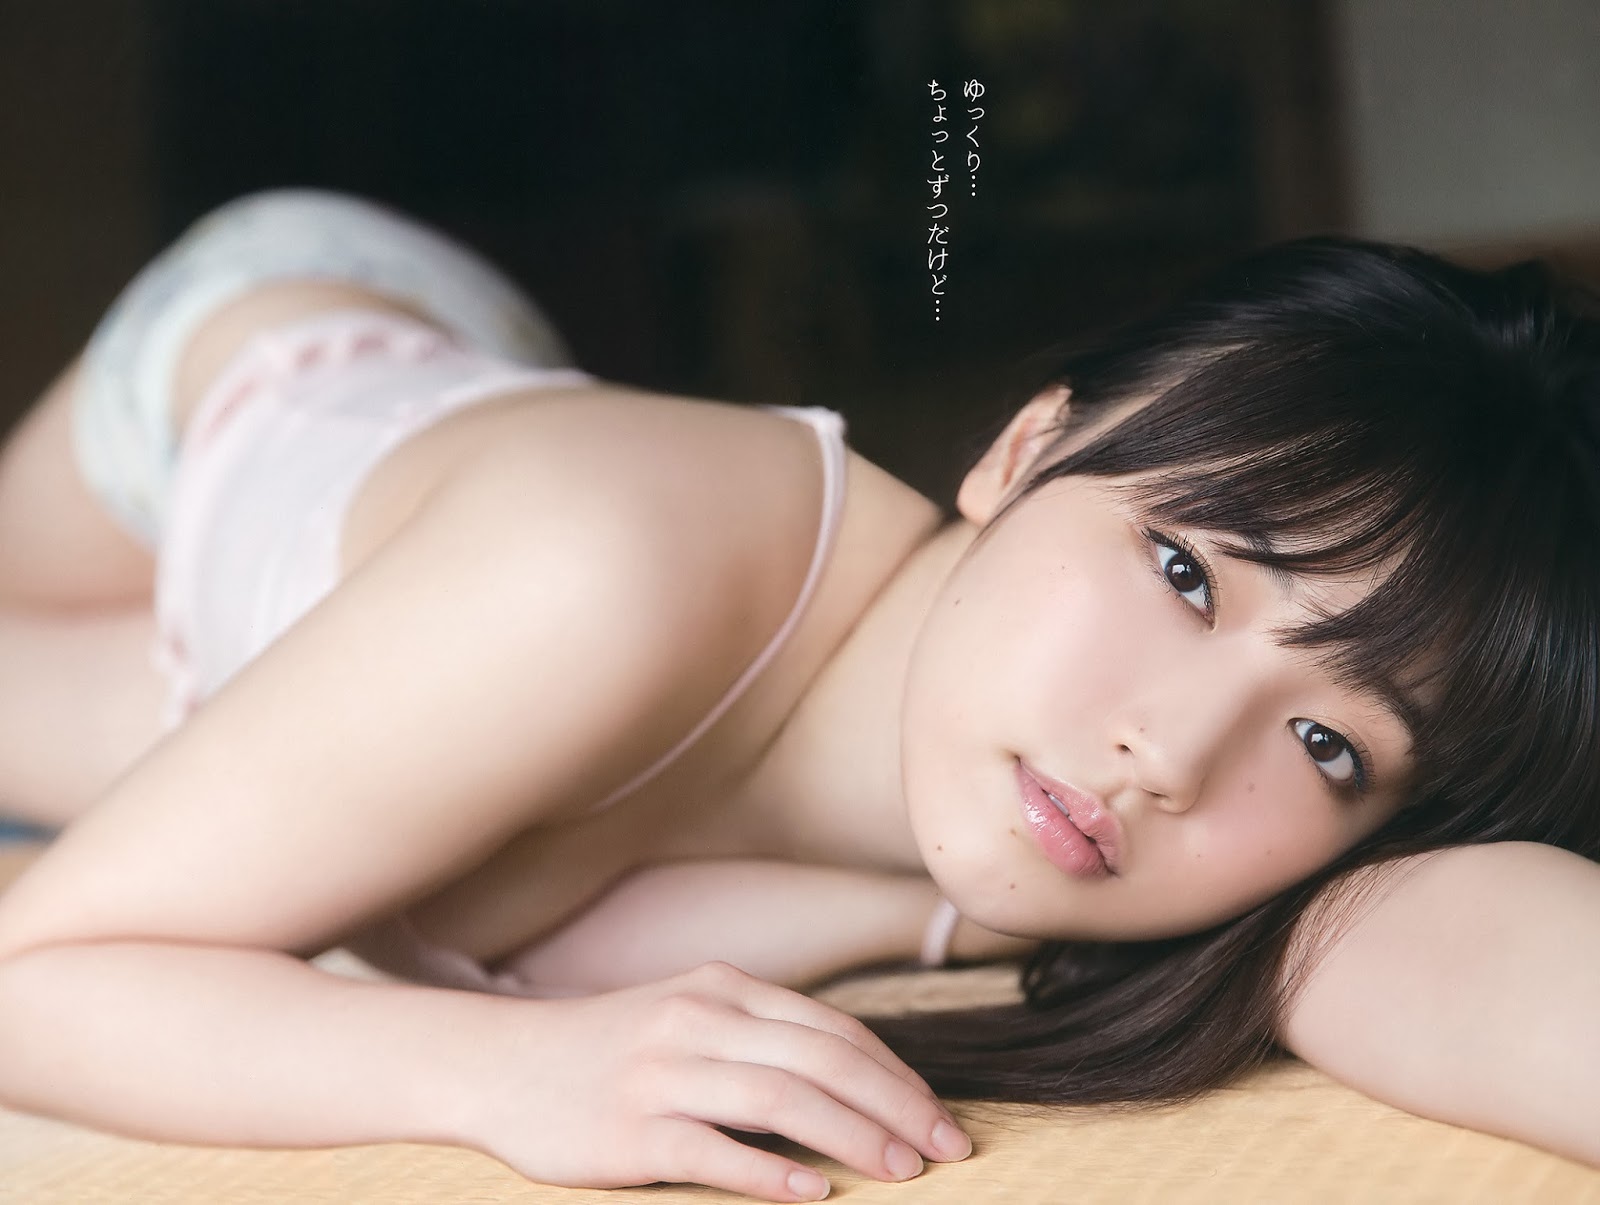 Fukumura Mizuki 譜久村聖 Morning Musume, Young Gangan Magazine No.10 2016 Special PhotoBook Chapter One